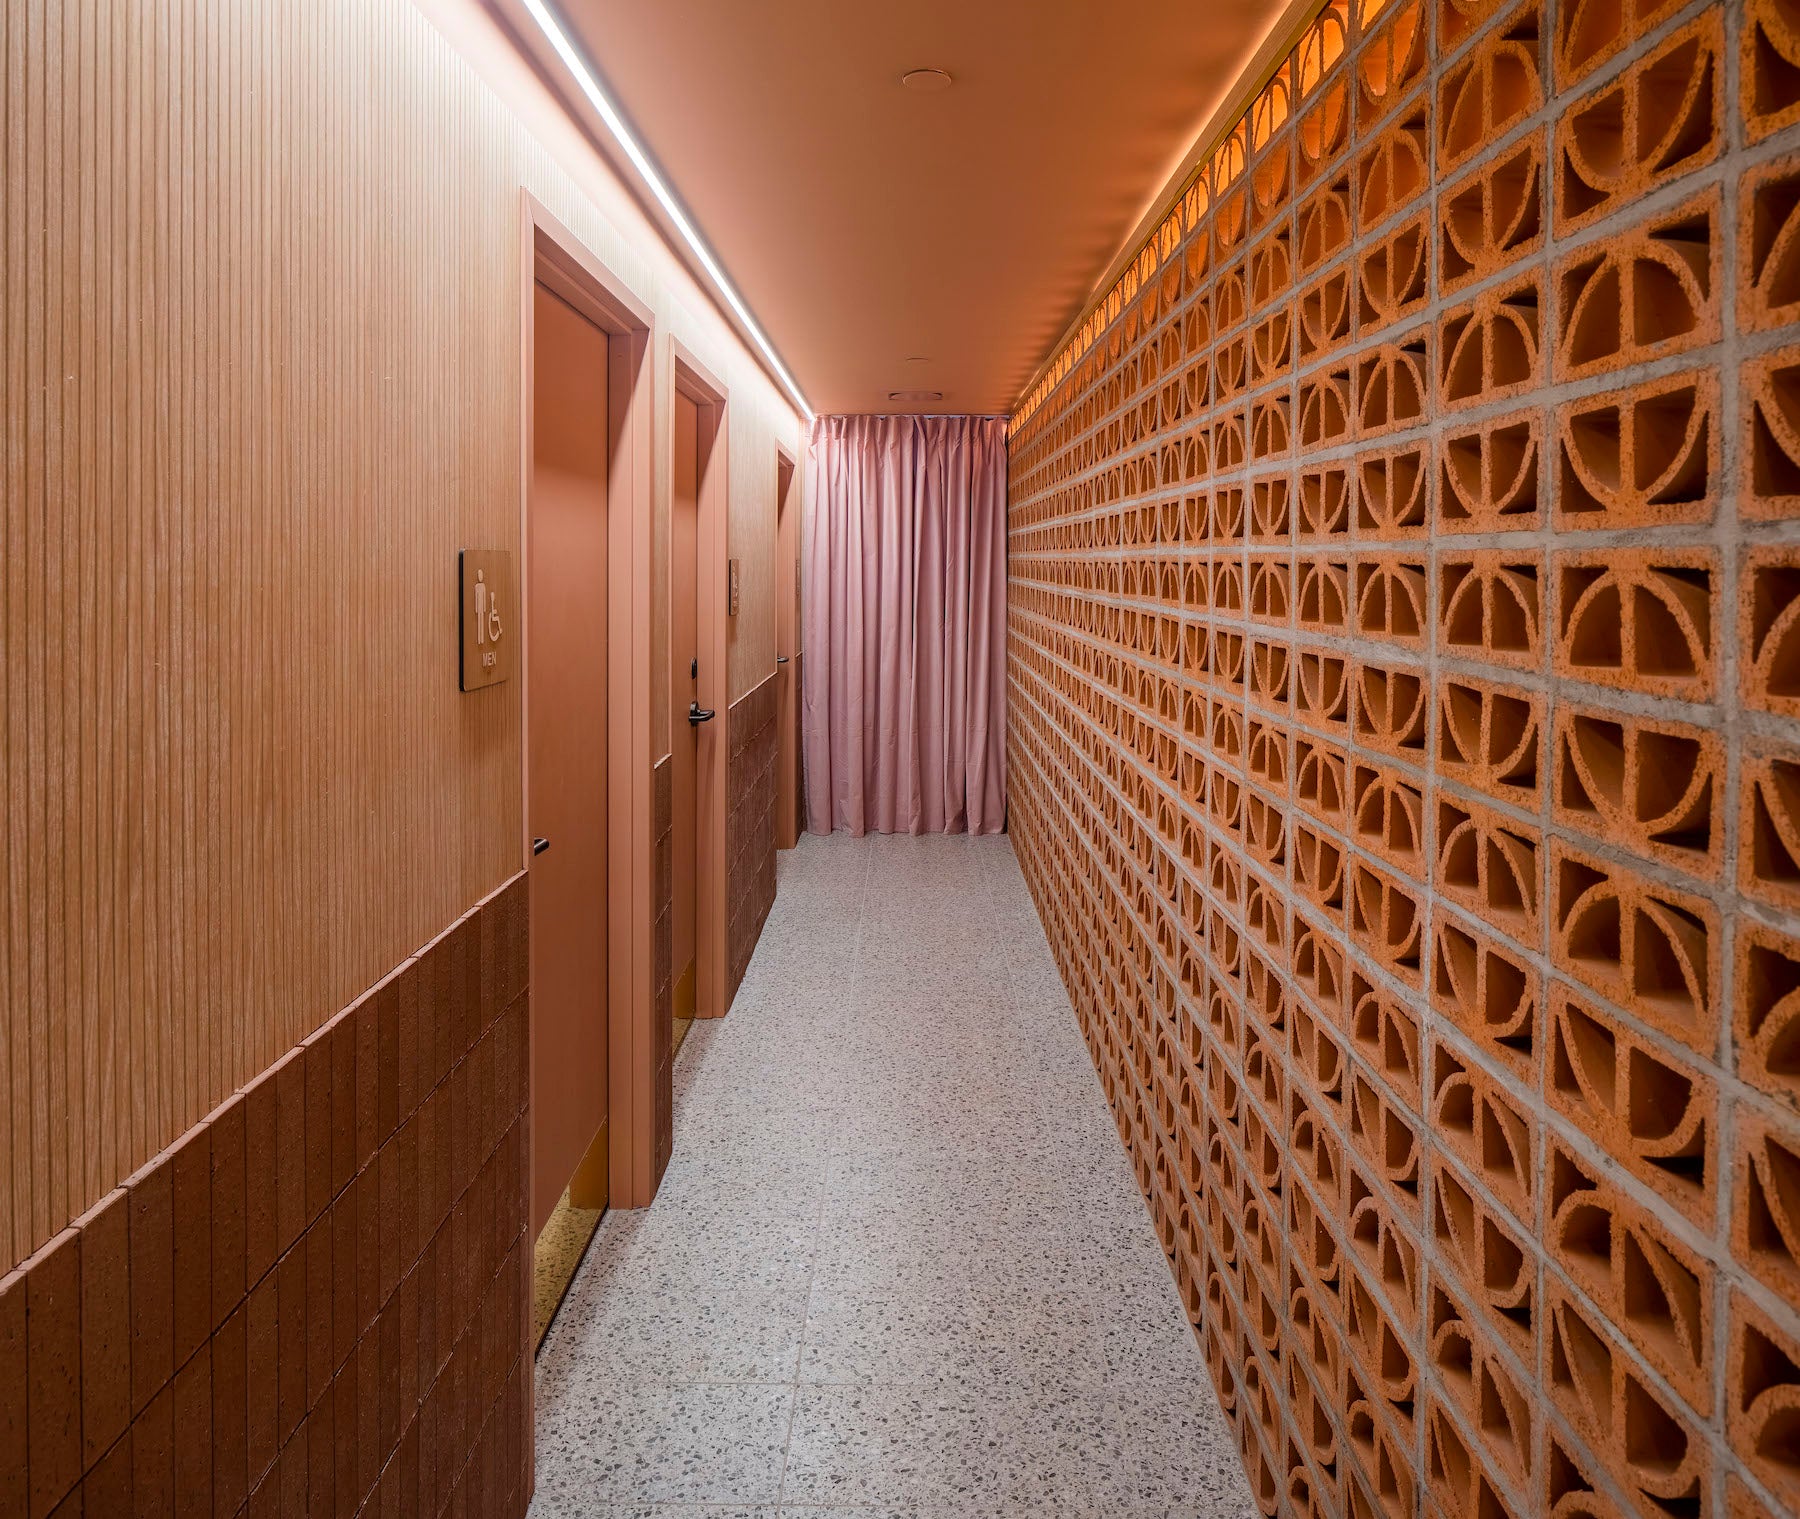 Interior hallway with breeze blocks wall